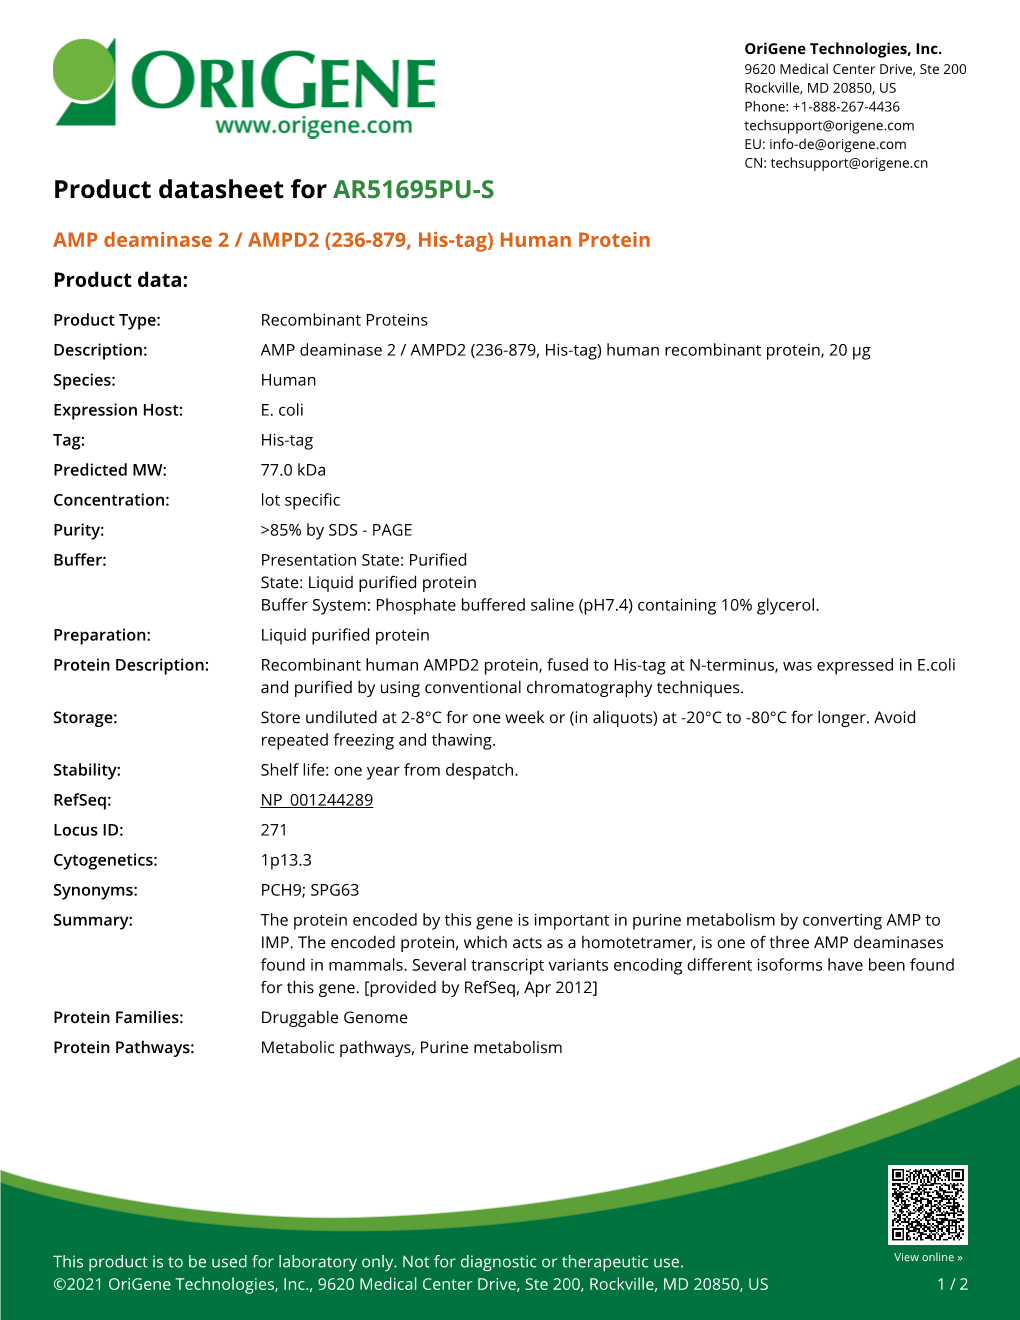 AMP Deaminase 2 / AMPD2 (236-879, His-Tag) Human Protein Product Data